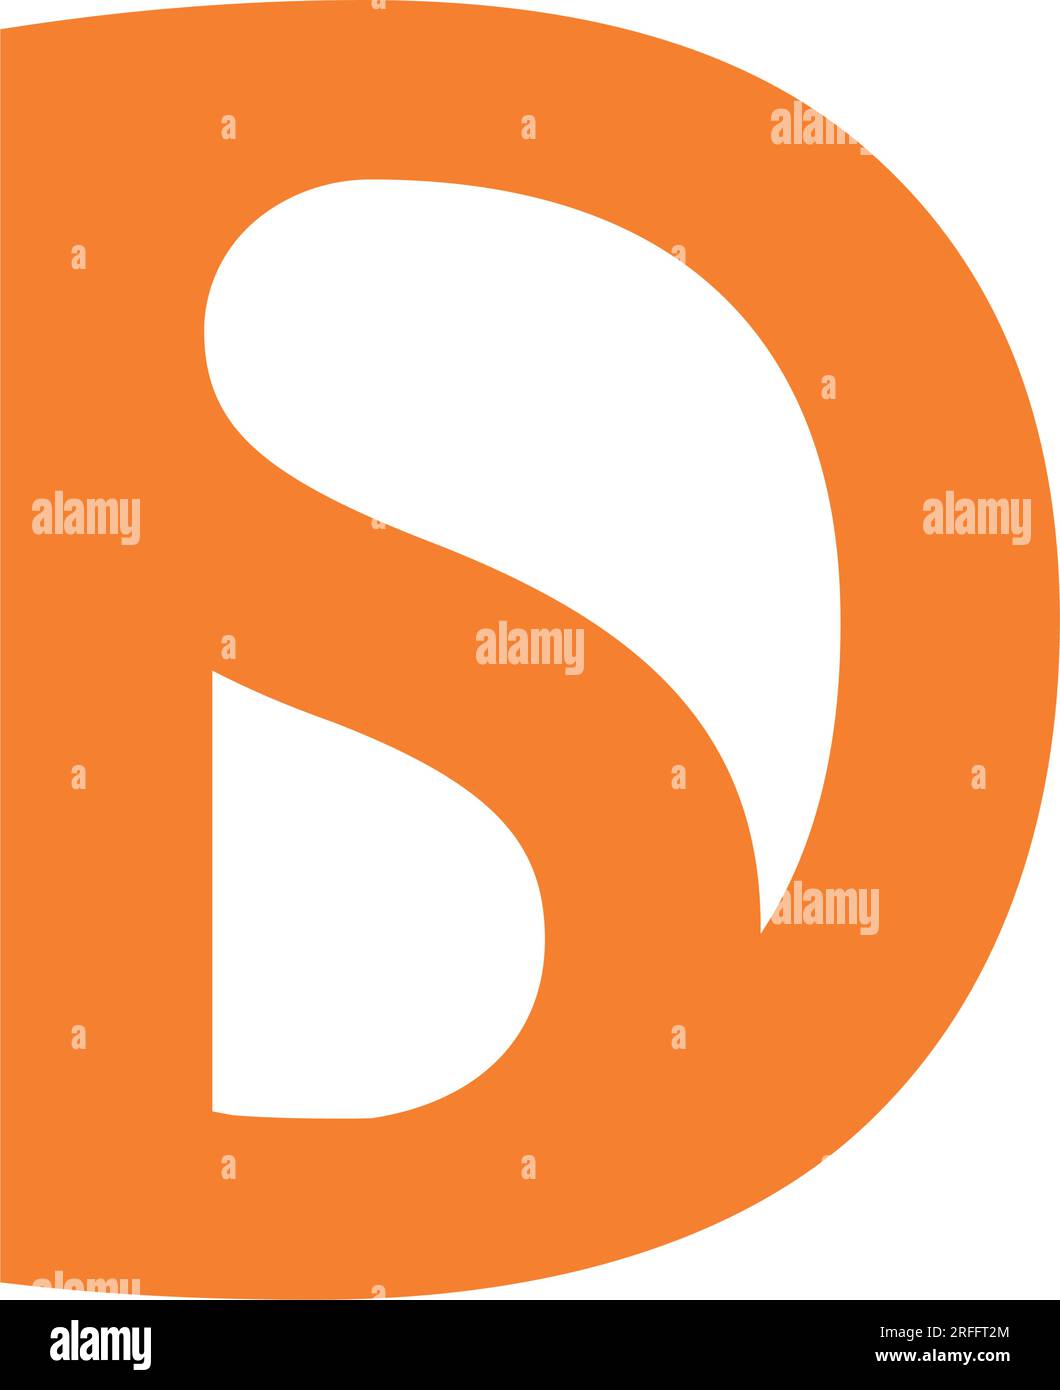 D and S letter logo vector illustration design Stock Vector